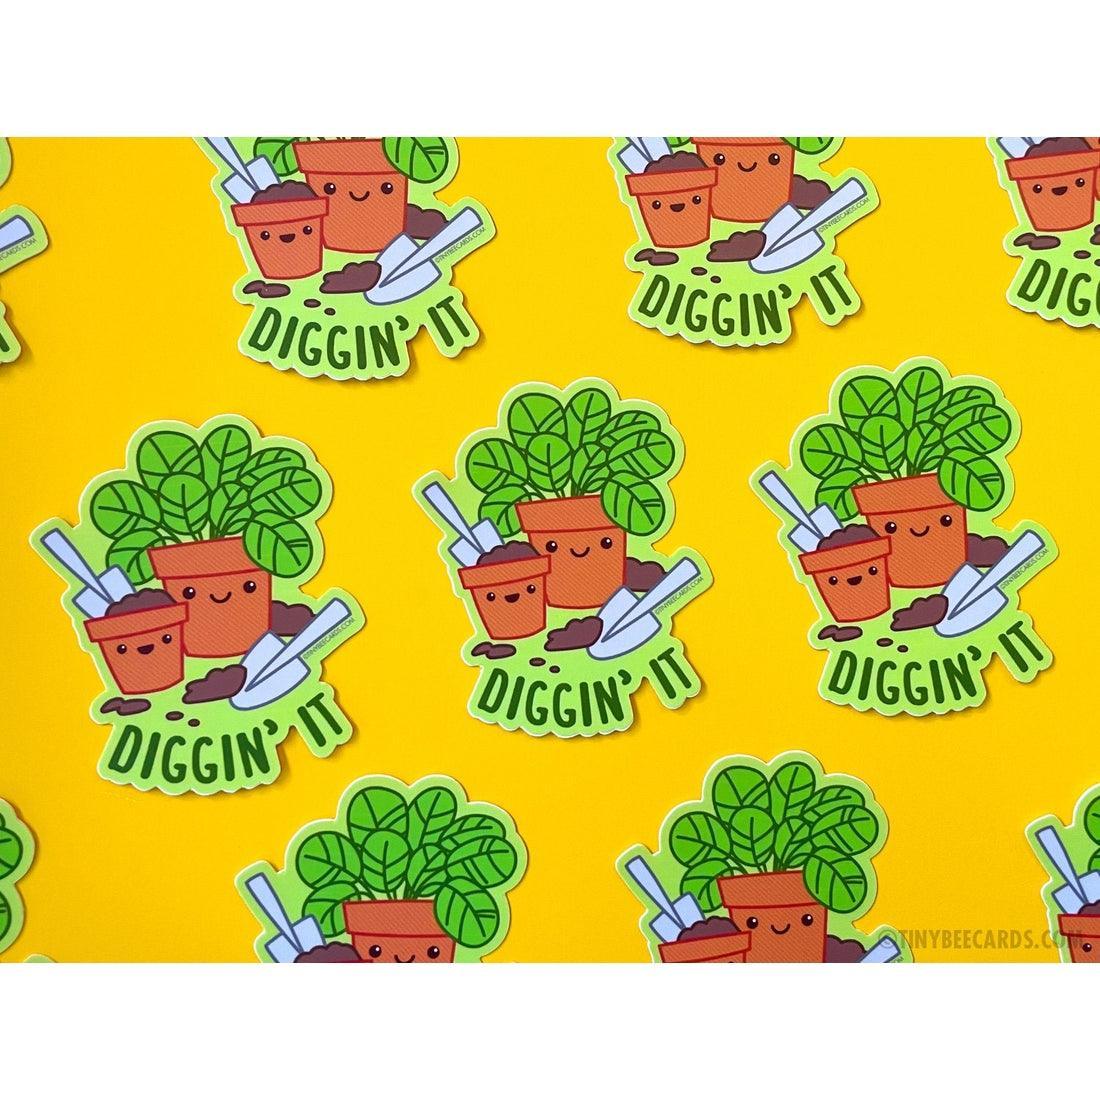 "Diggin' It" | Vinyl Sticker - Tiny Bee Cards - The Sock Monster